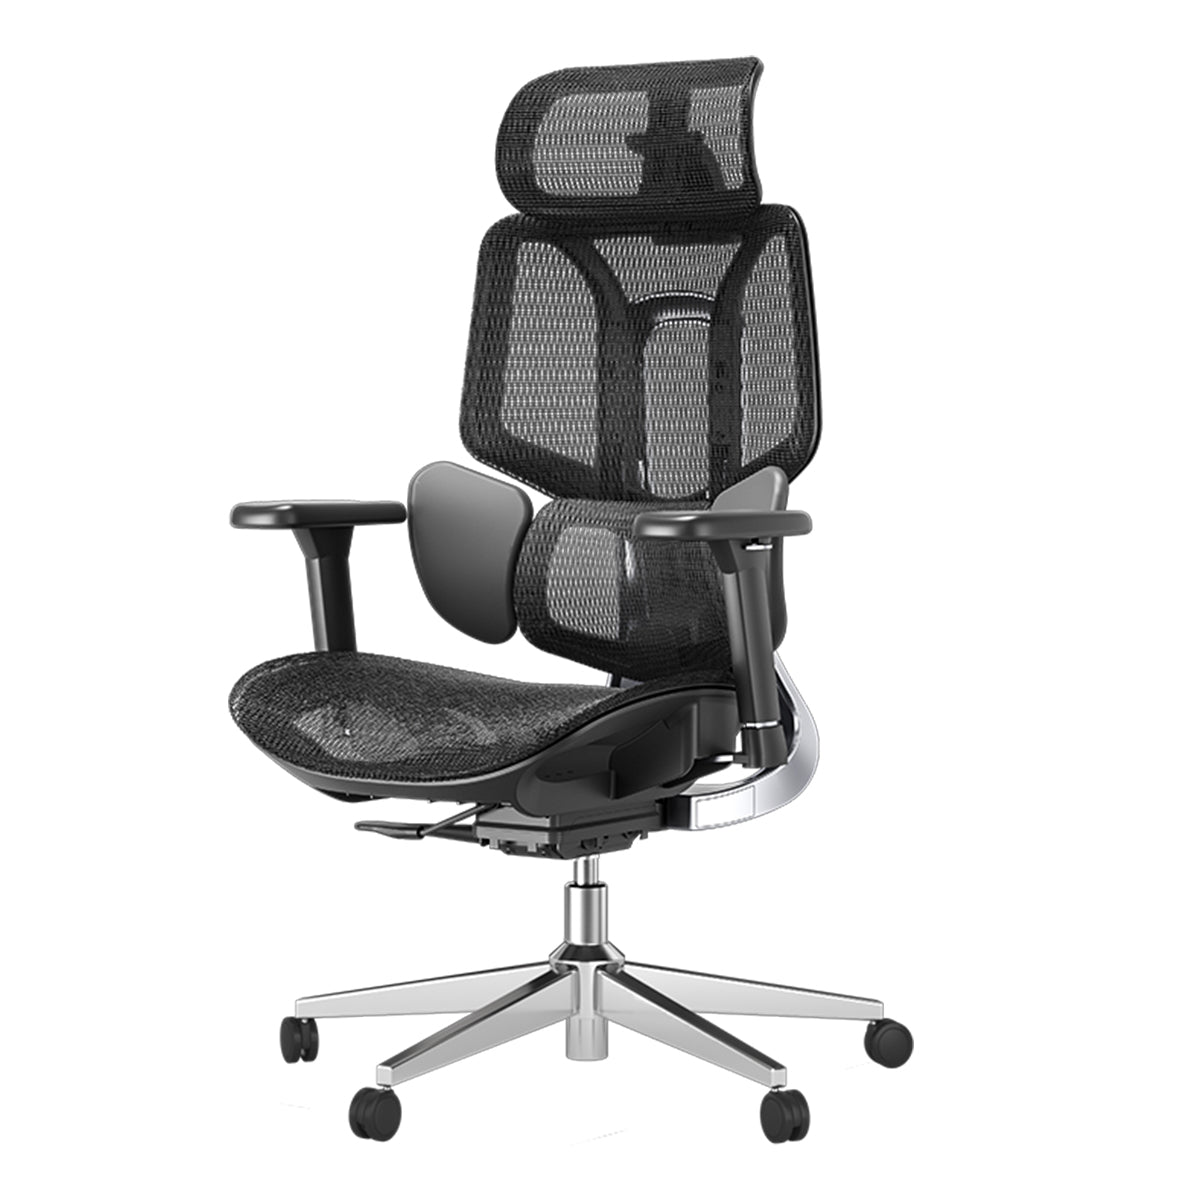 HBADA E3 Ergonomic Office Chair-Black